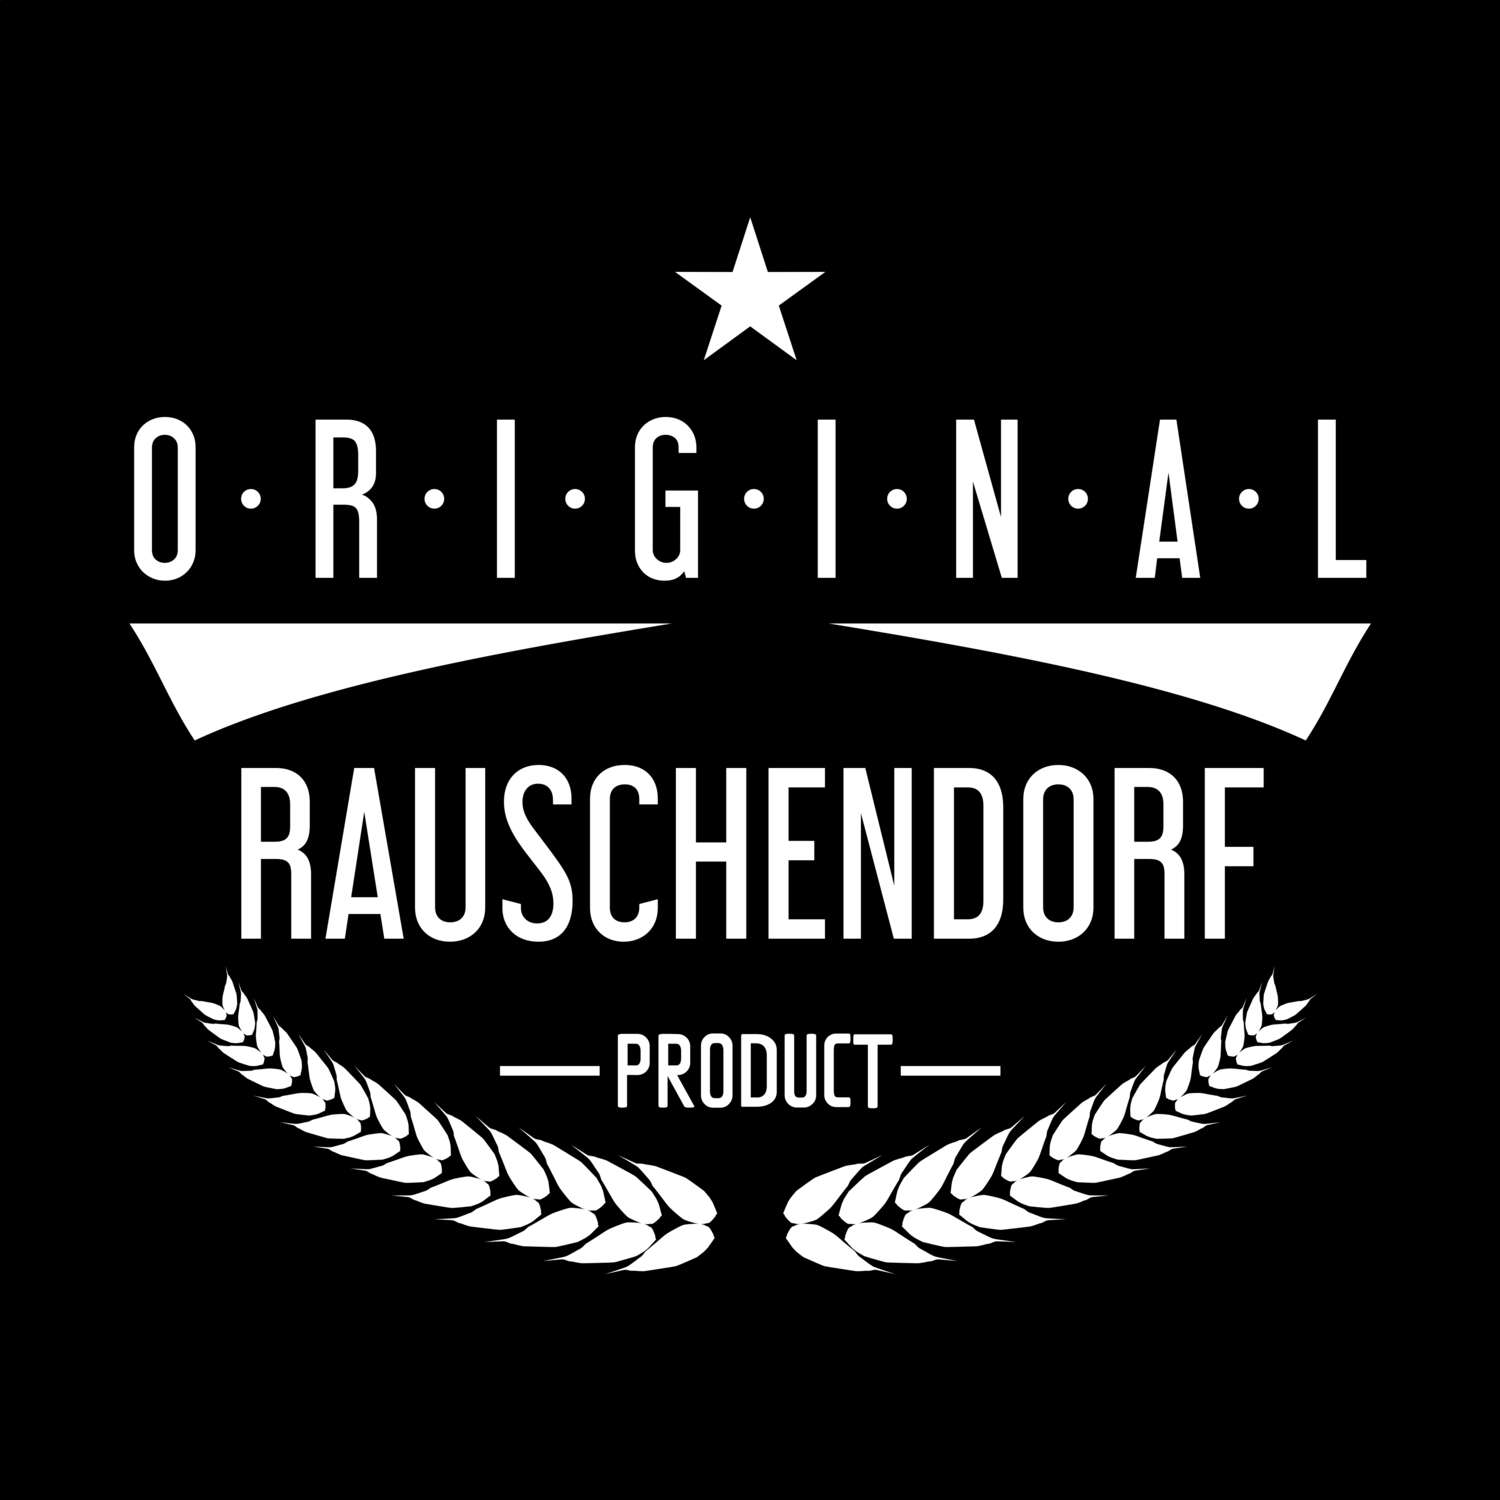 Rauschendorf T-Shirt »Original Product«